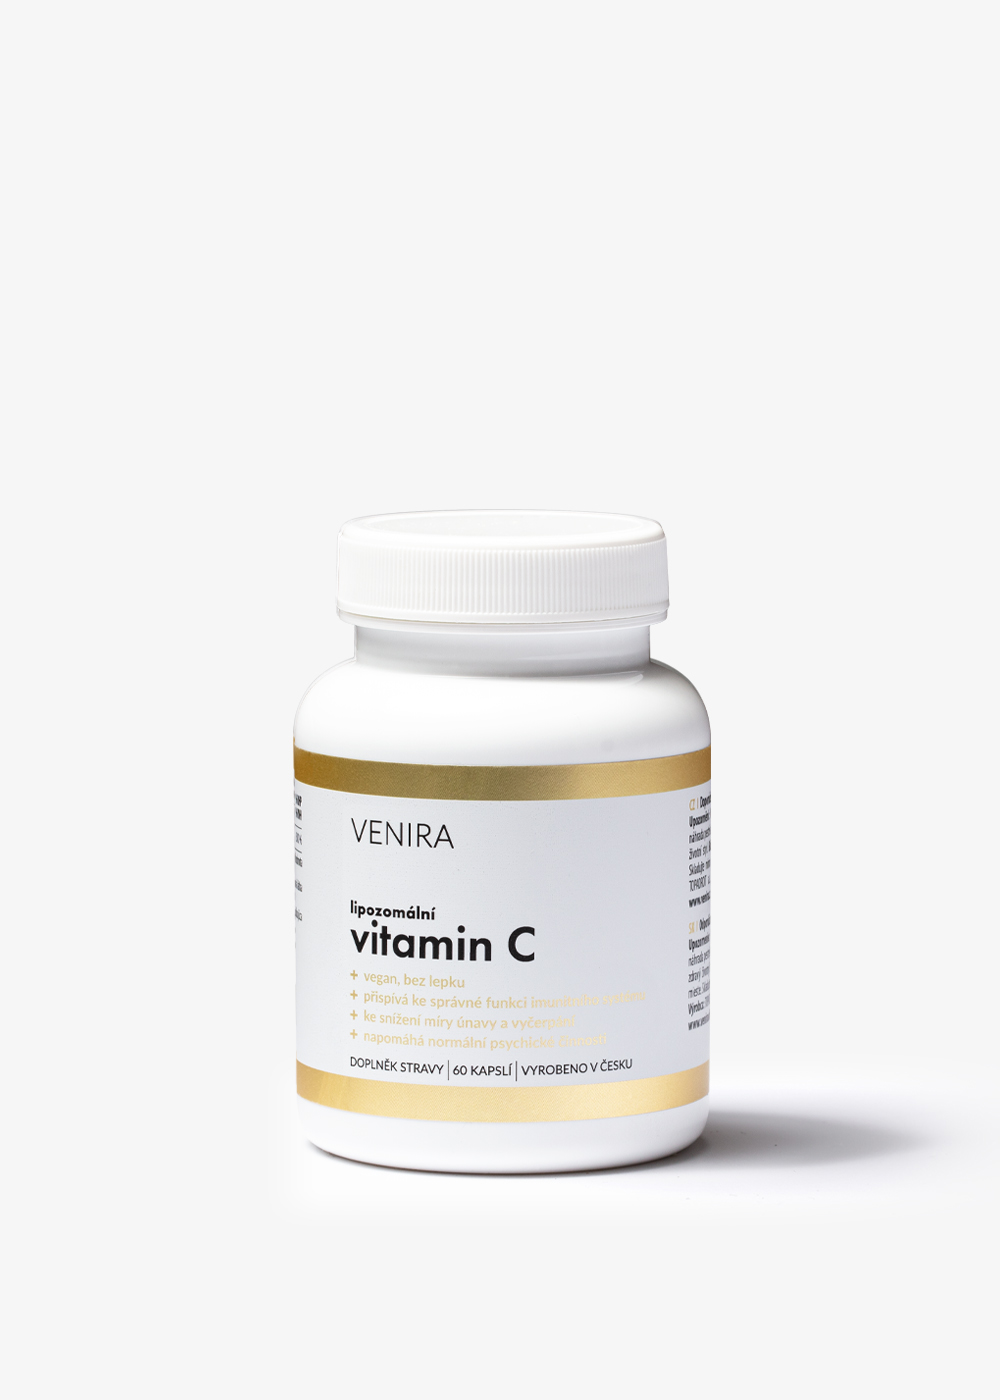 VENIRA lipozomálny vitamin C, 60 kapsúl